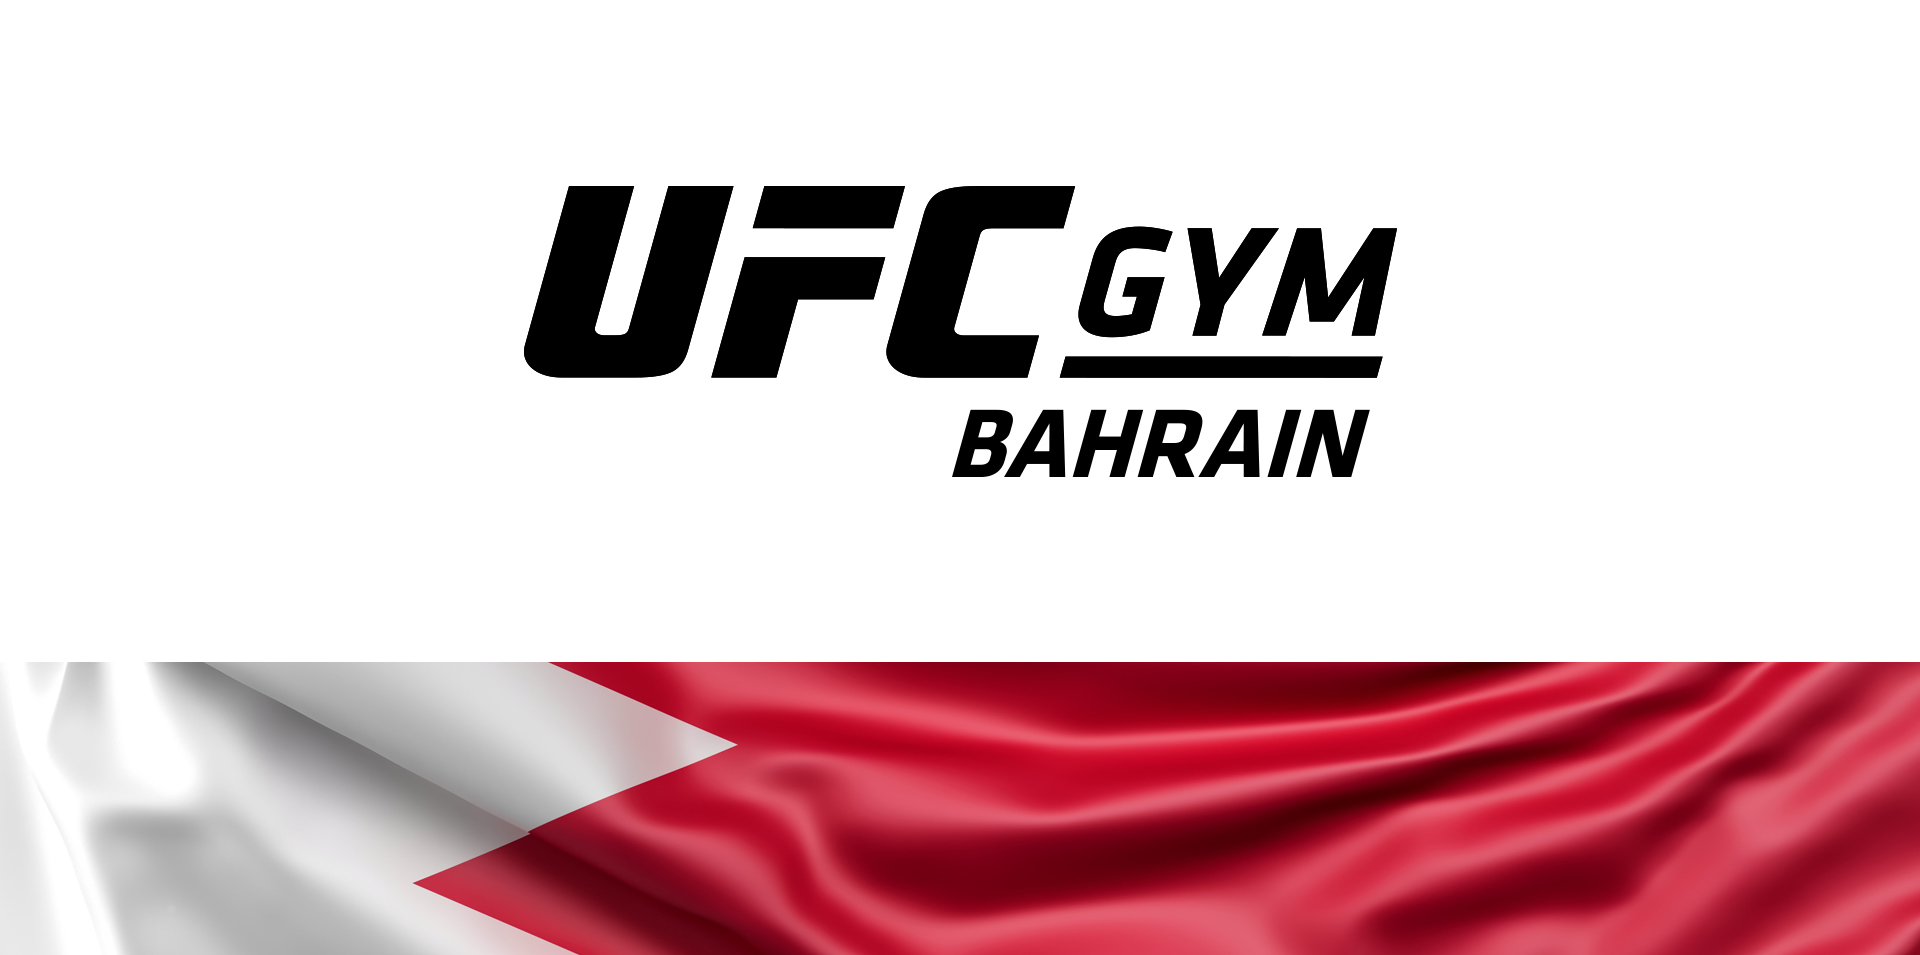 Bahrain Featured Image